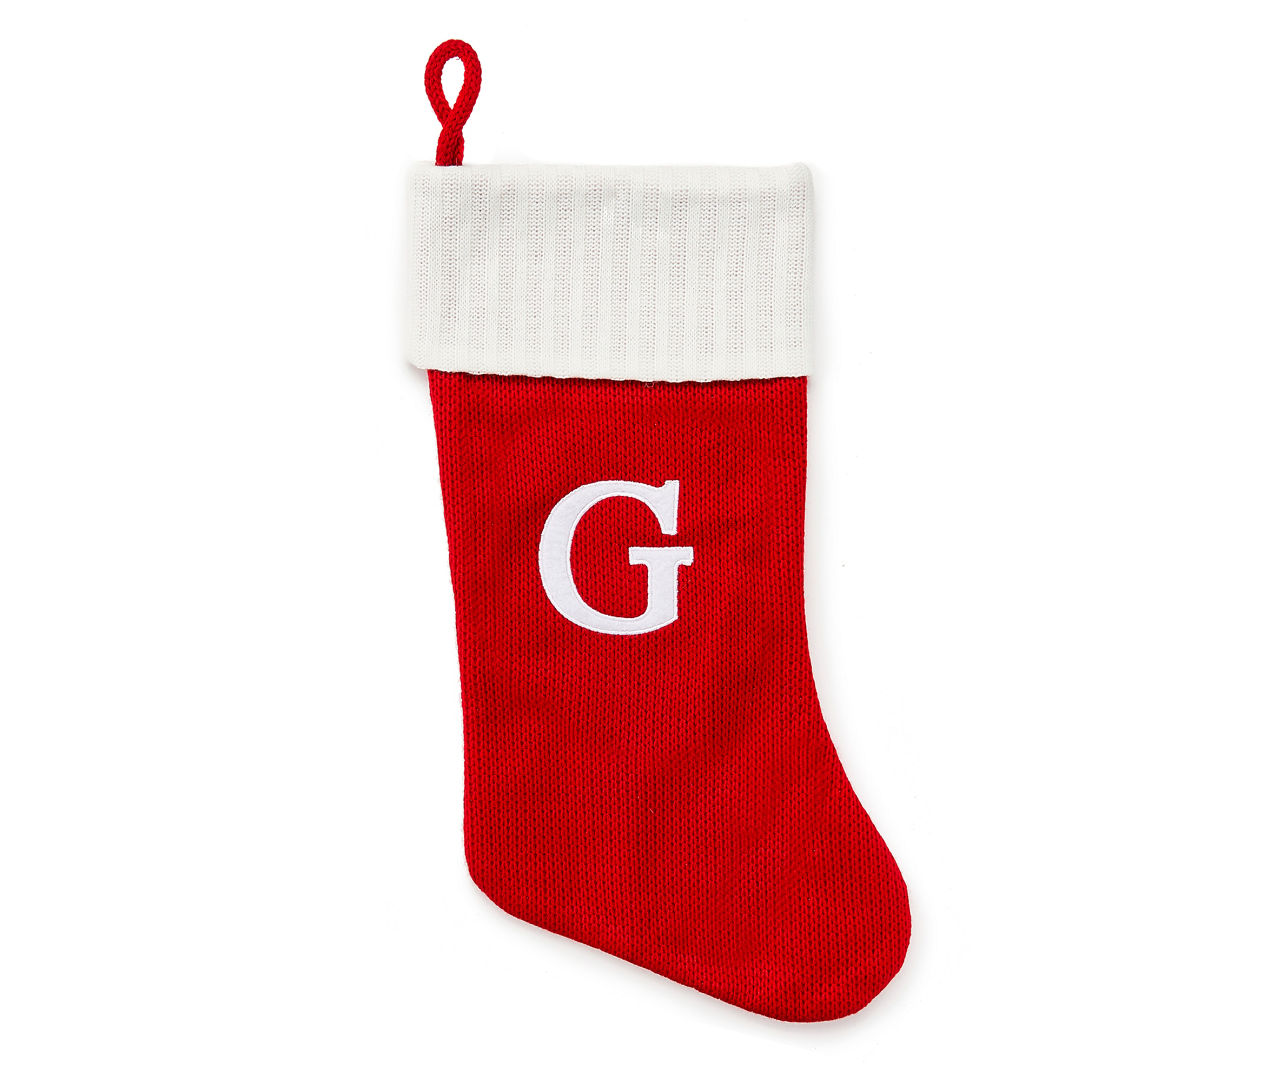 "G" Monogram Red Knit Stocking with White Trim